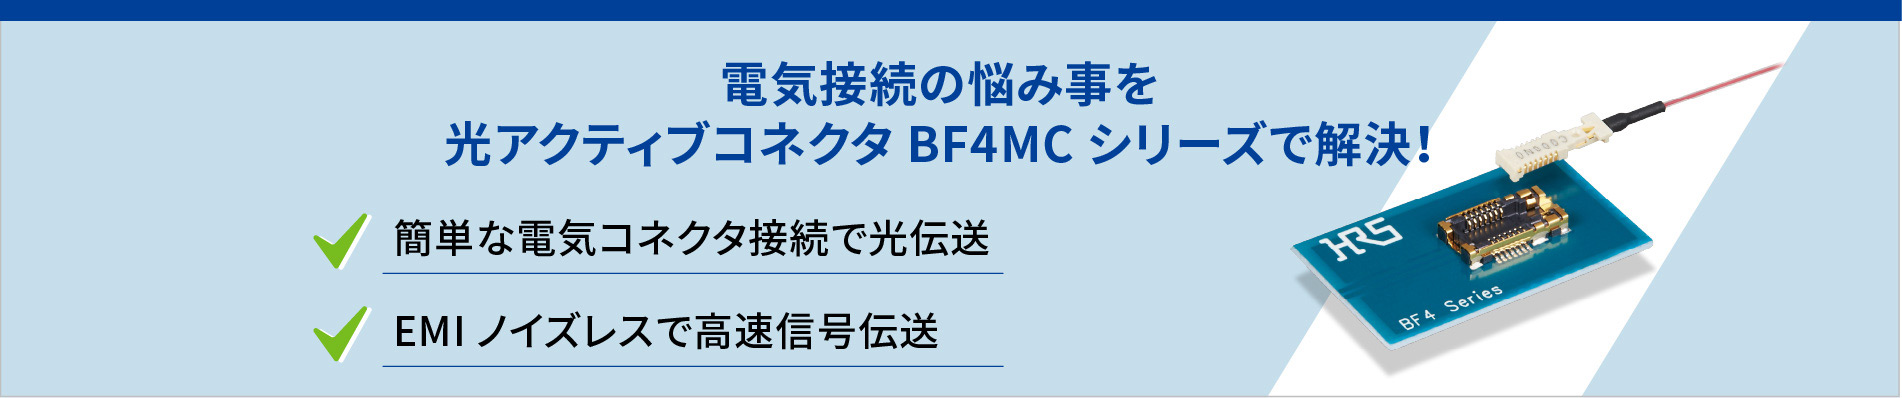 BF4MC_Banner_JP.jpg